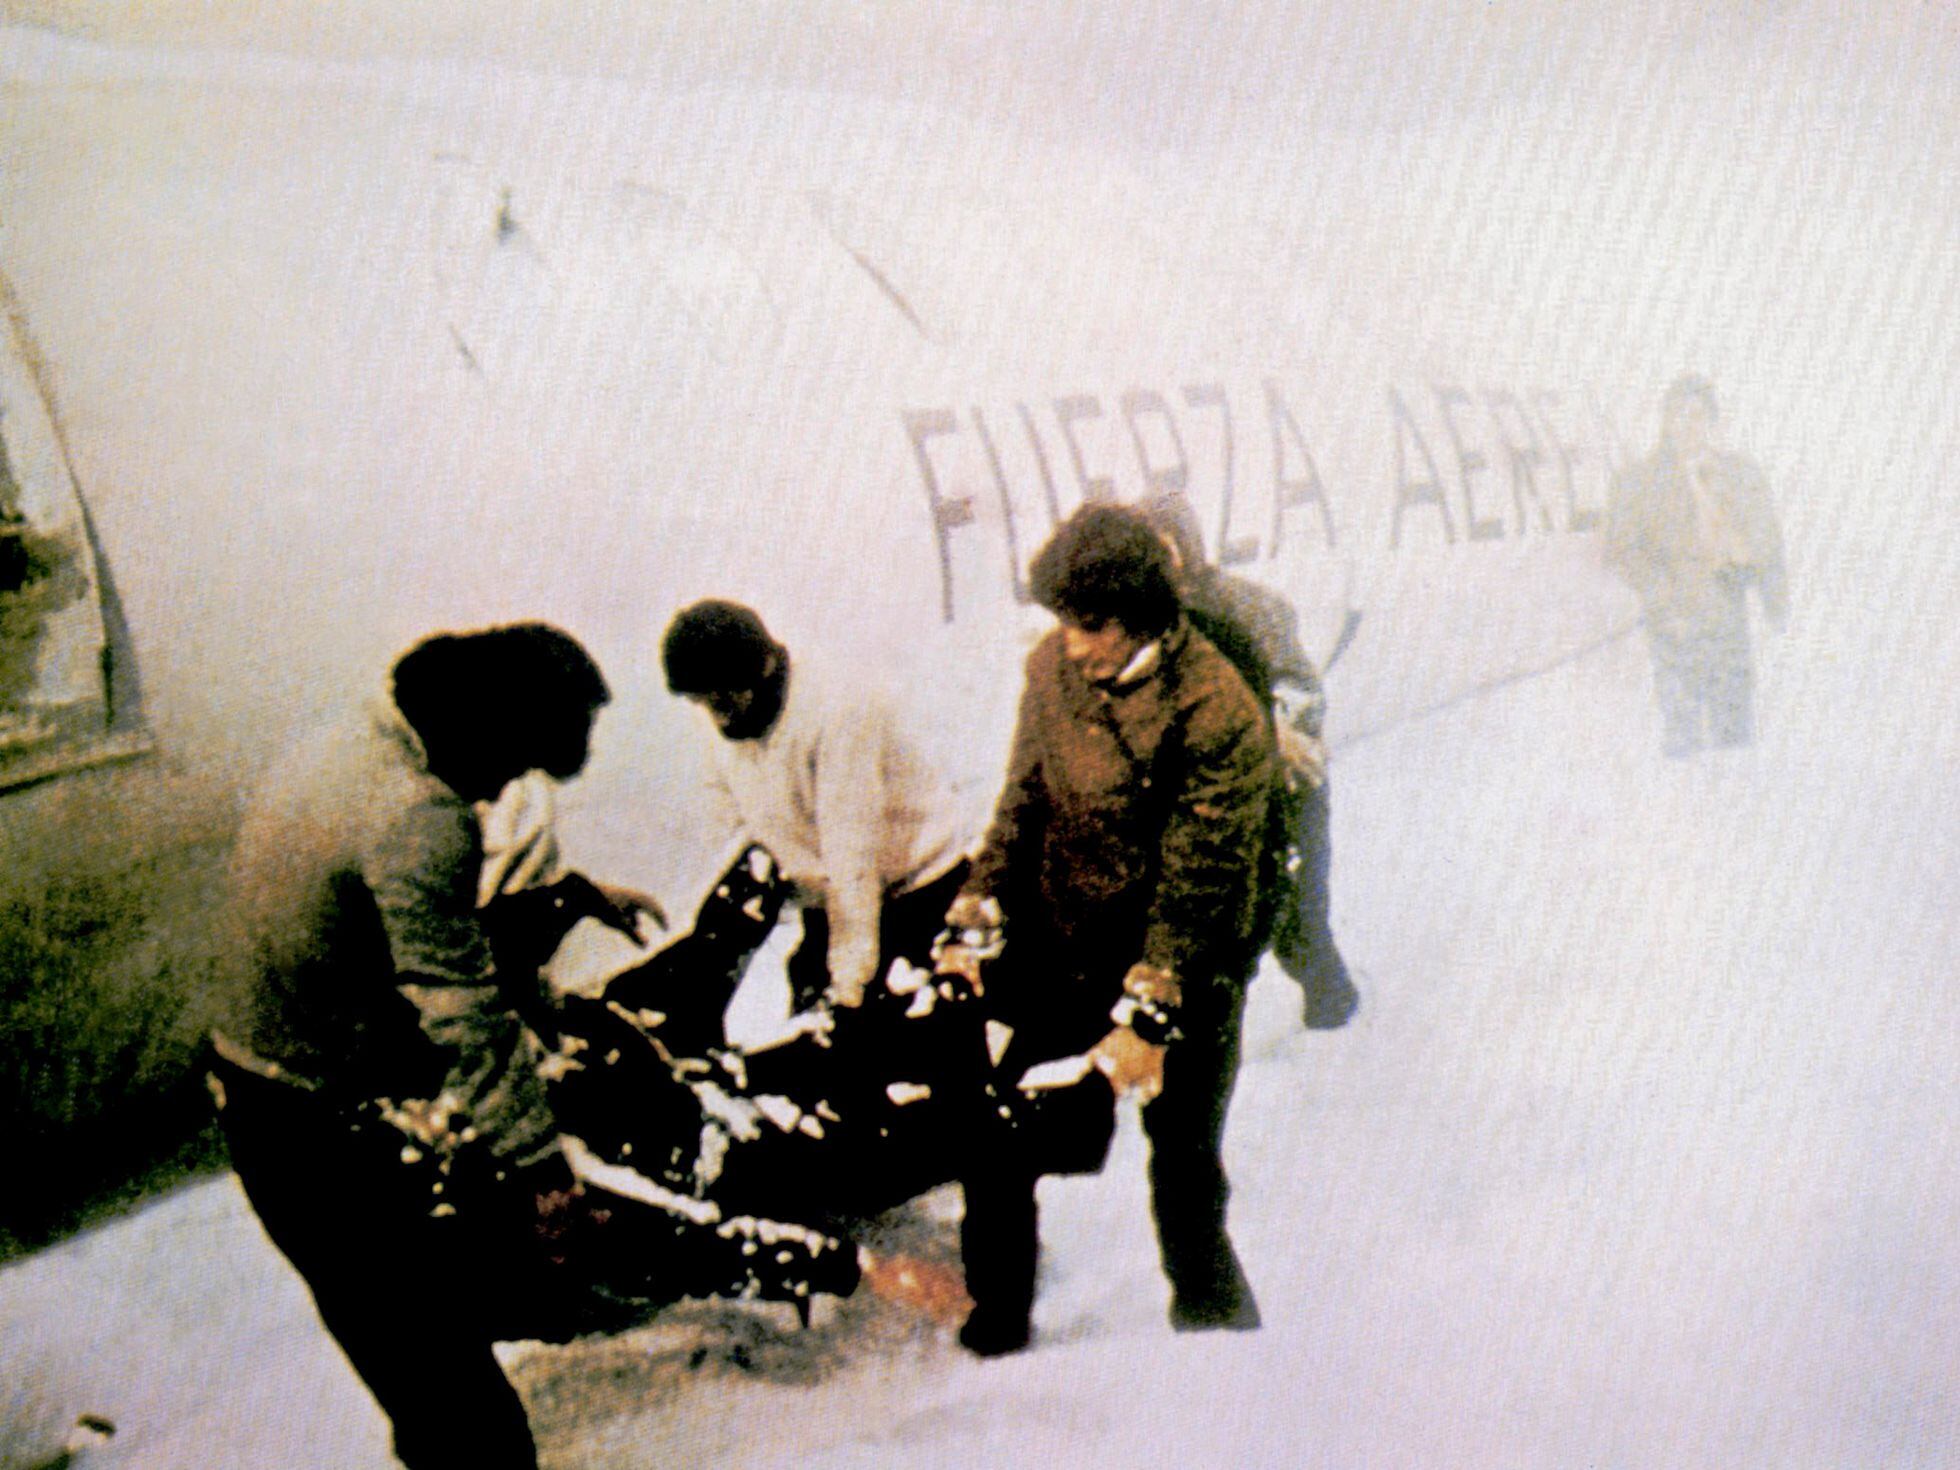 Who is Roberto Canessa? Exploring the 1972 plane crash survivor's